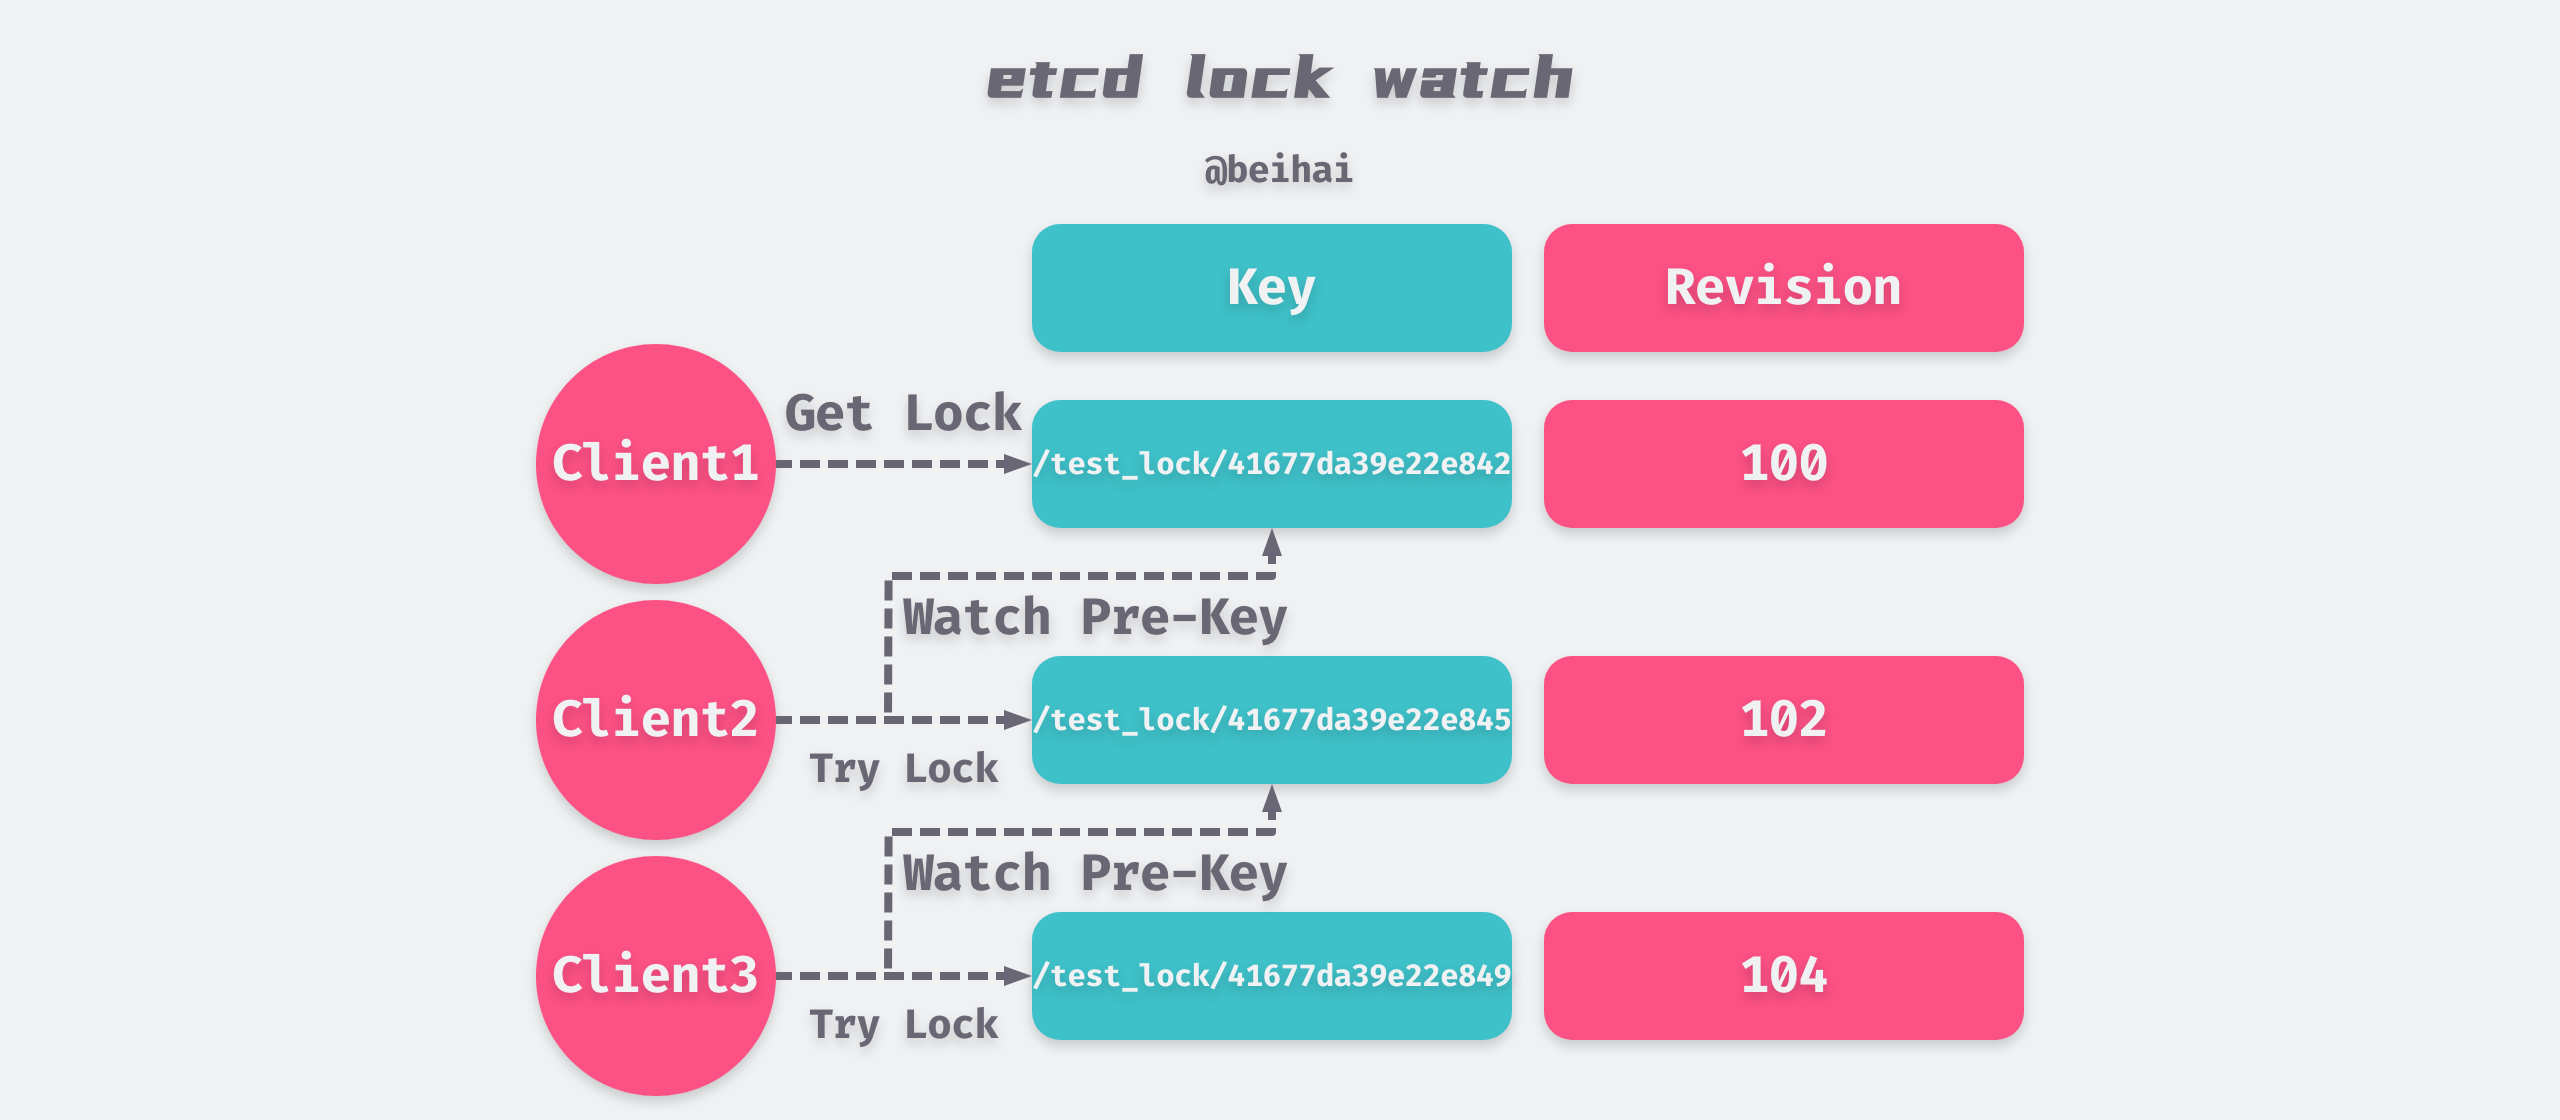 etcd lock Watch